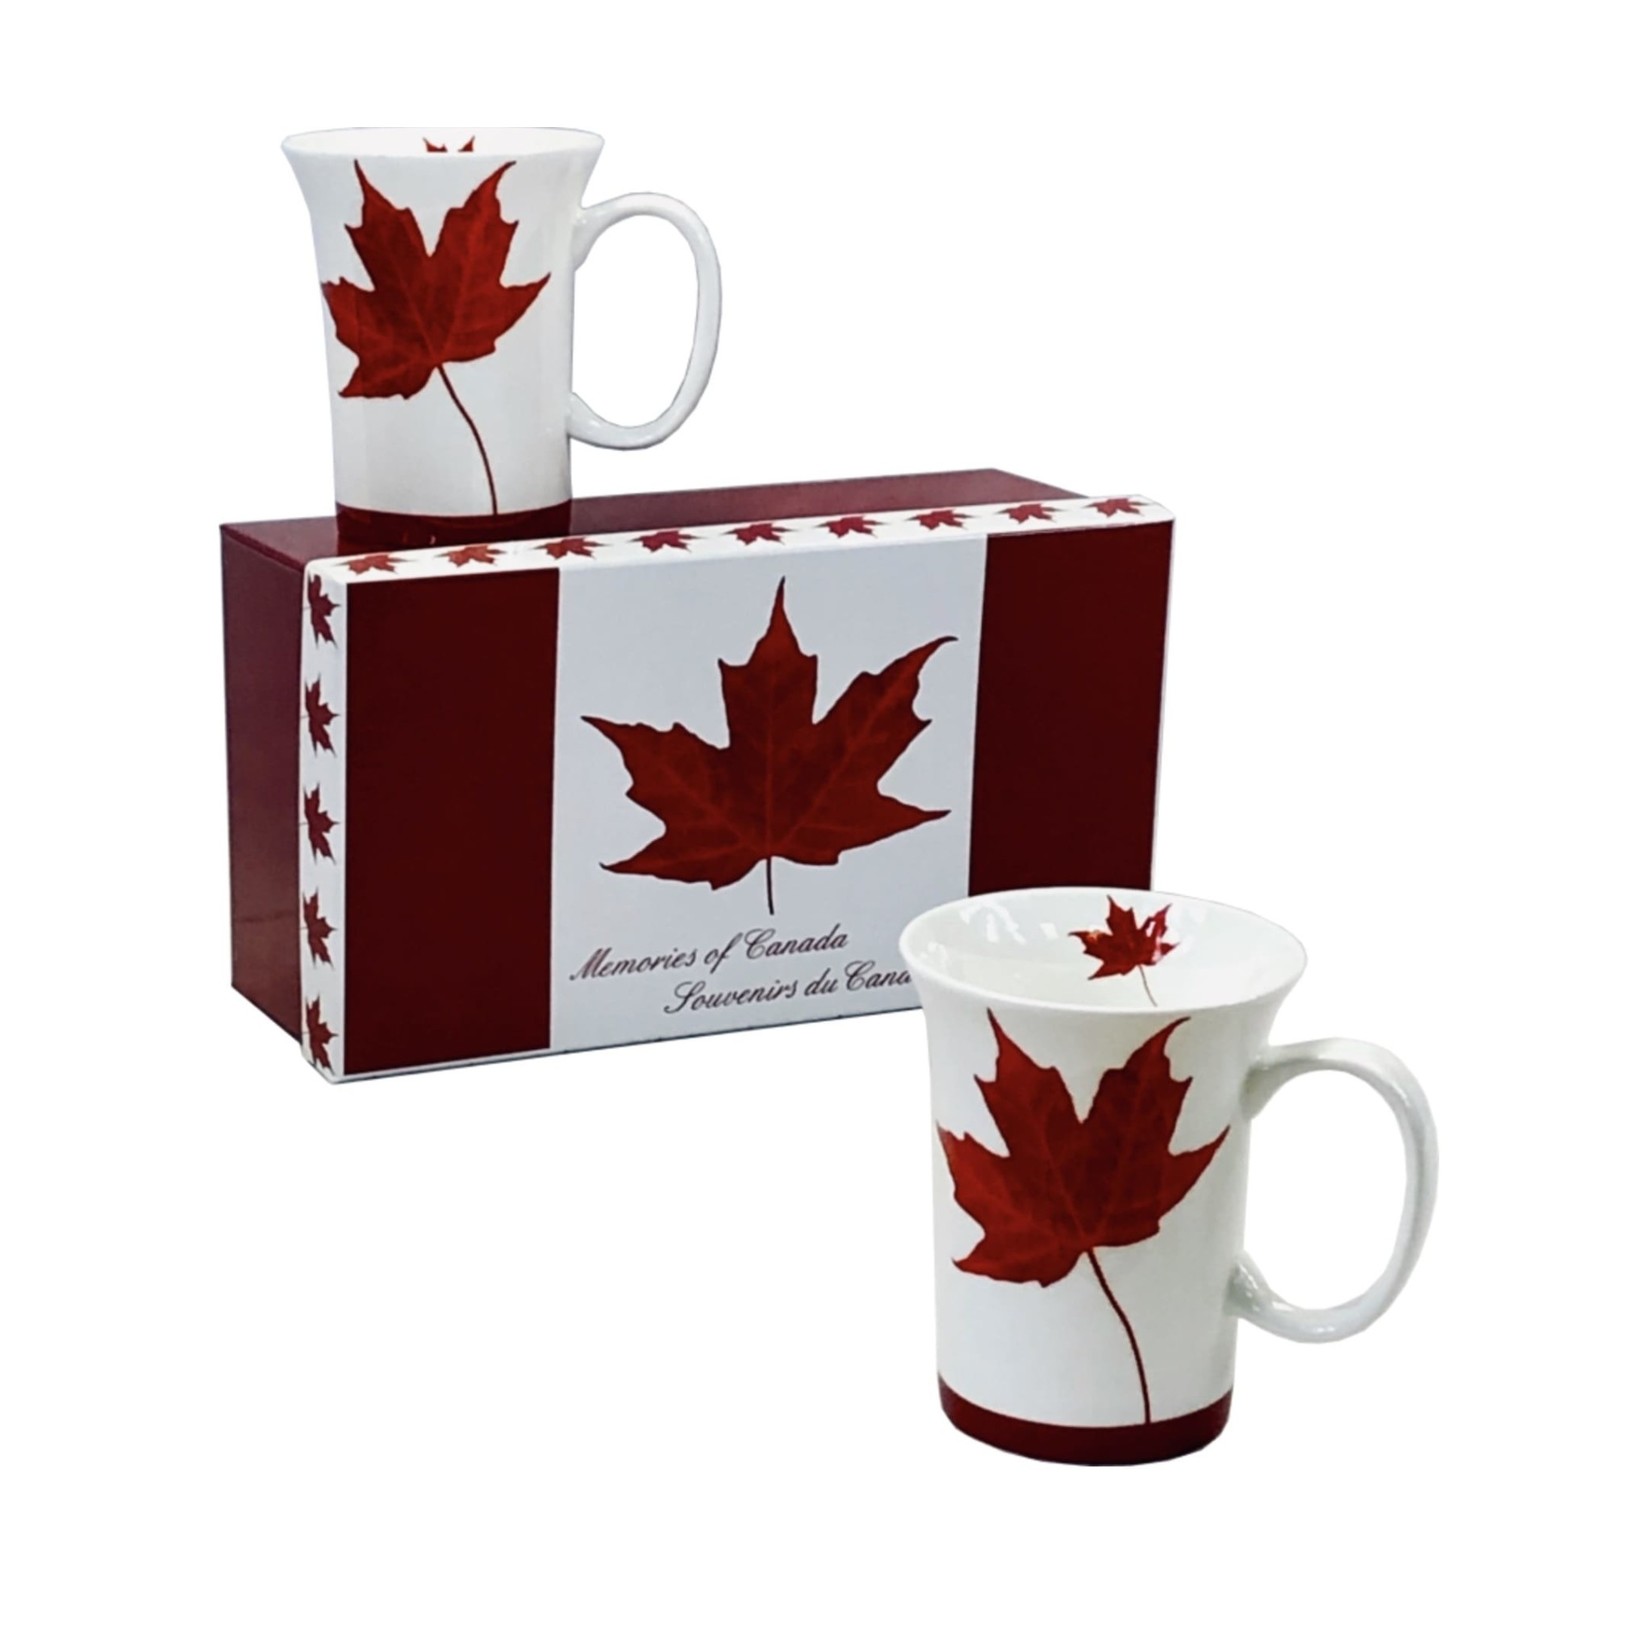 MCINTOSH MCINTOSH Memories of Canada Mugs S/2